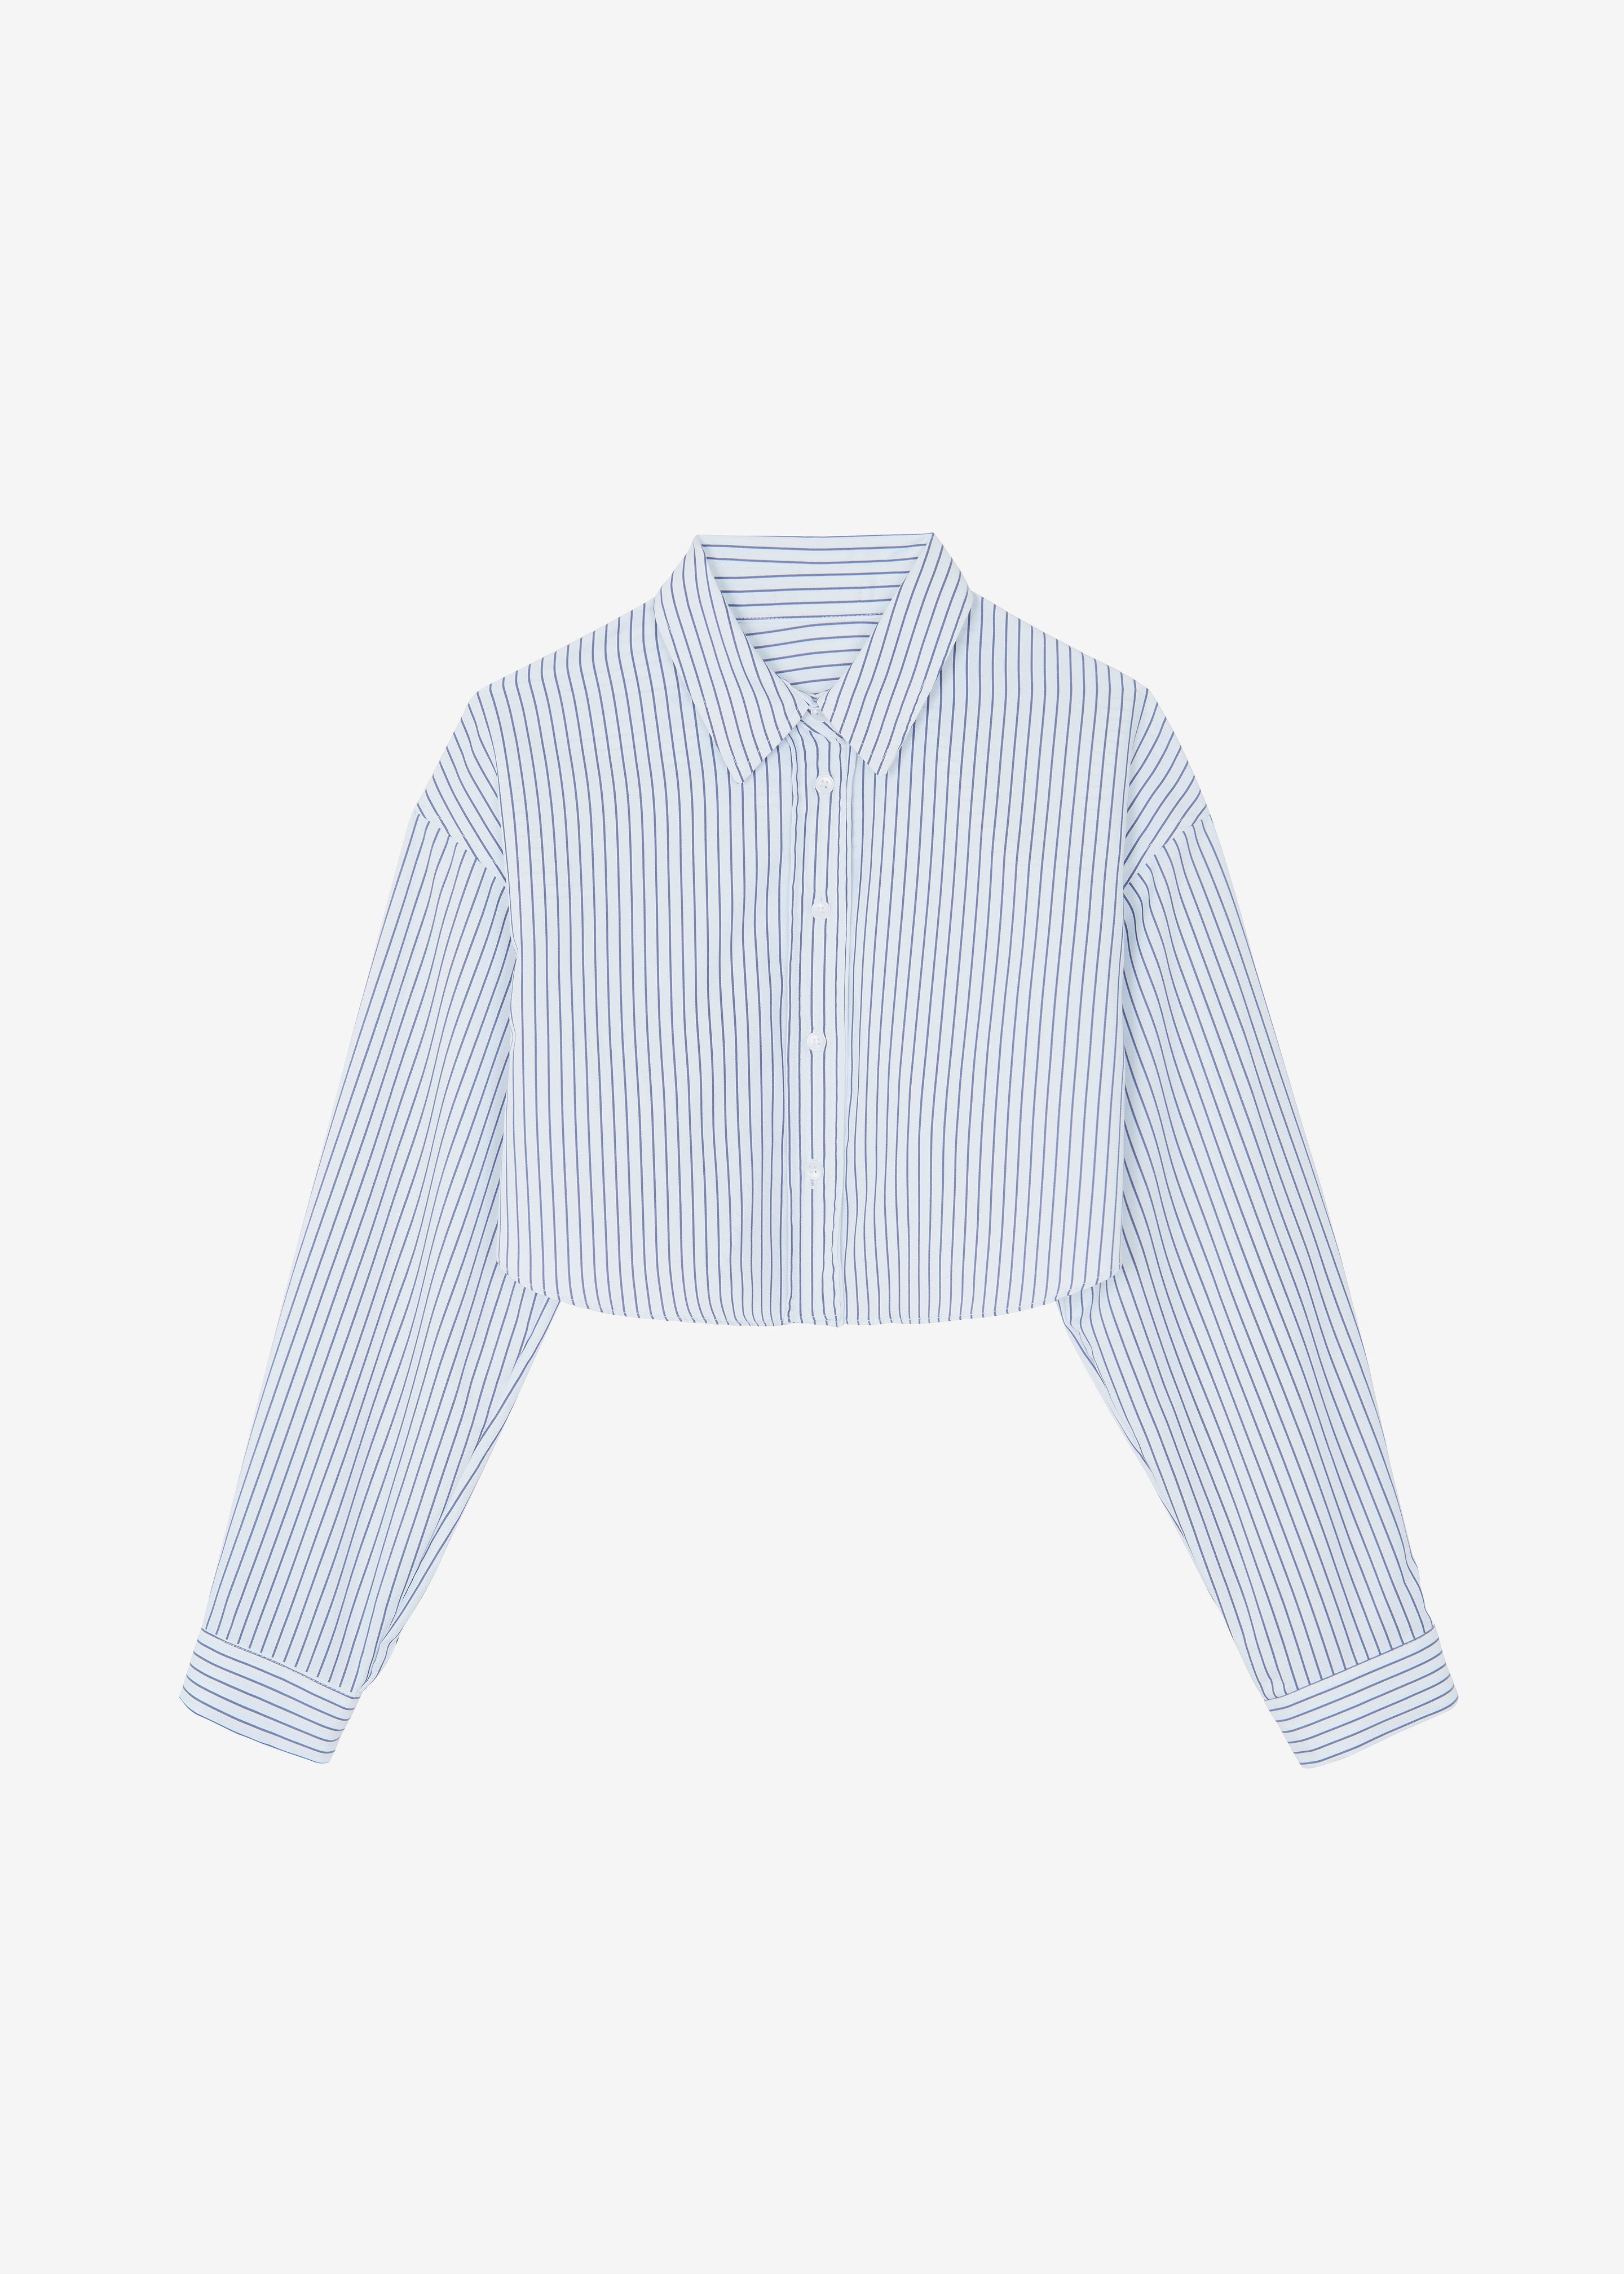 Palermo White Cropped Shirt - Navy Stripe - 7